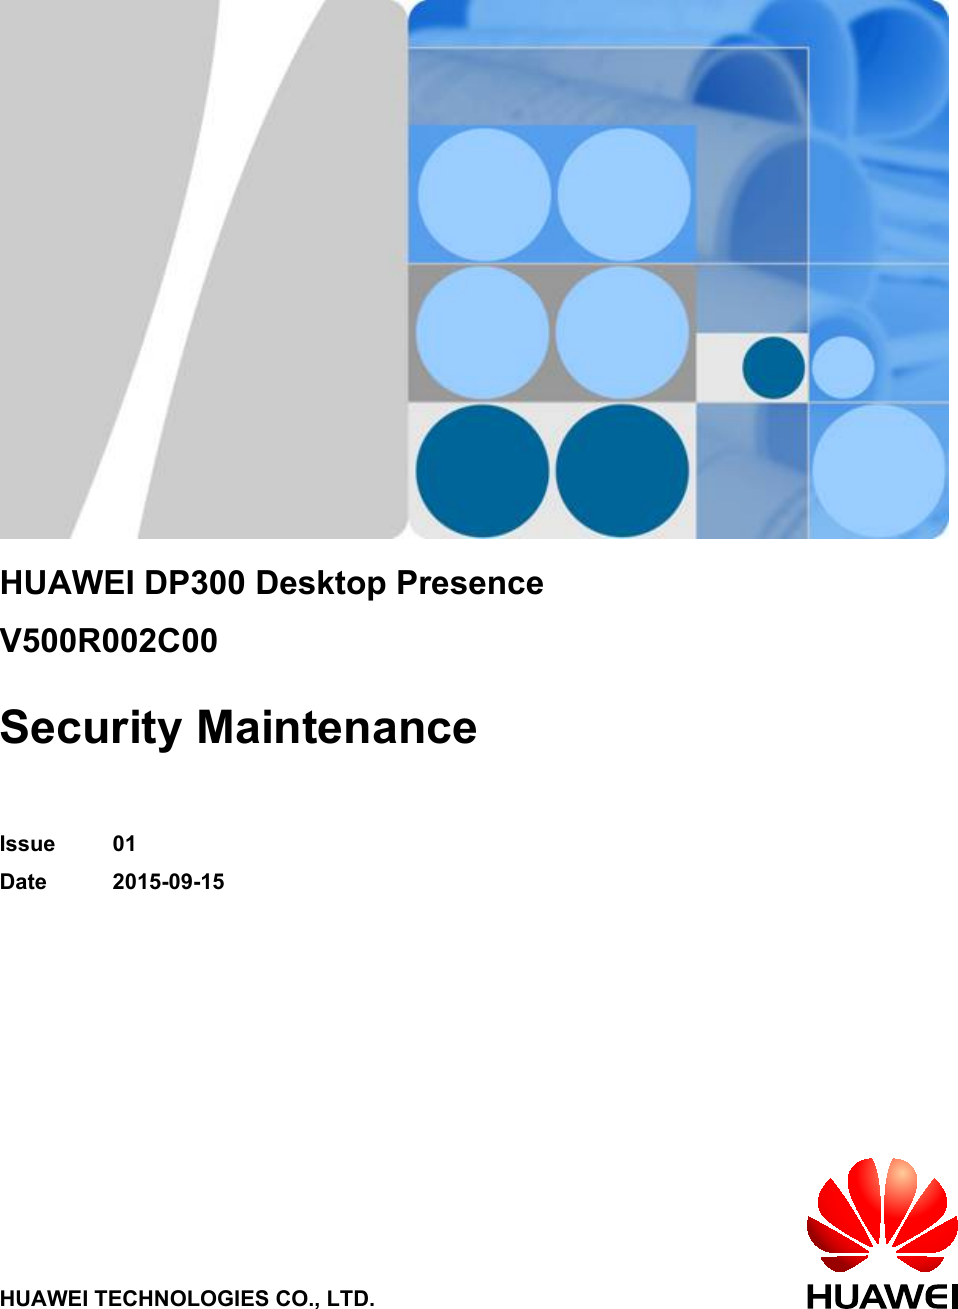 HUAWEI DP300 Desktop PresenceV500R002C00Security MaintenanceIssue 01Date 2015-09-15HUAWEI TECHNOLOGIES CO., LTD.